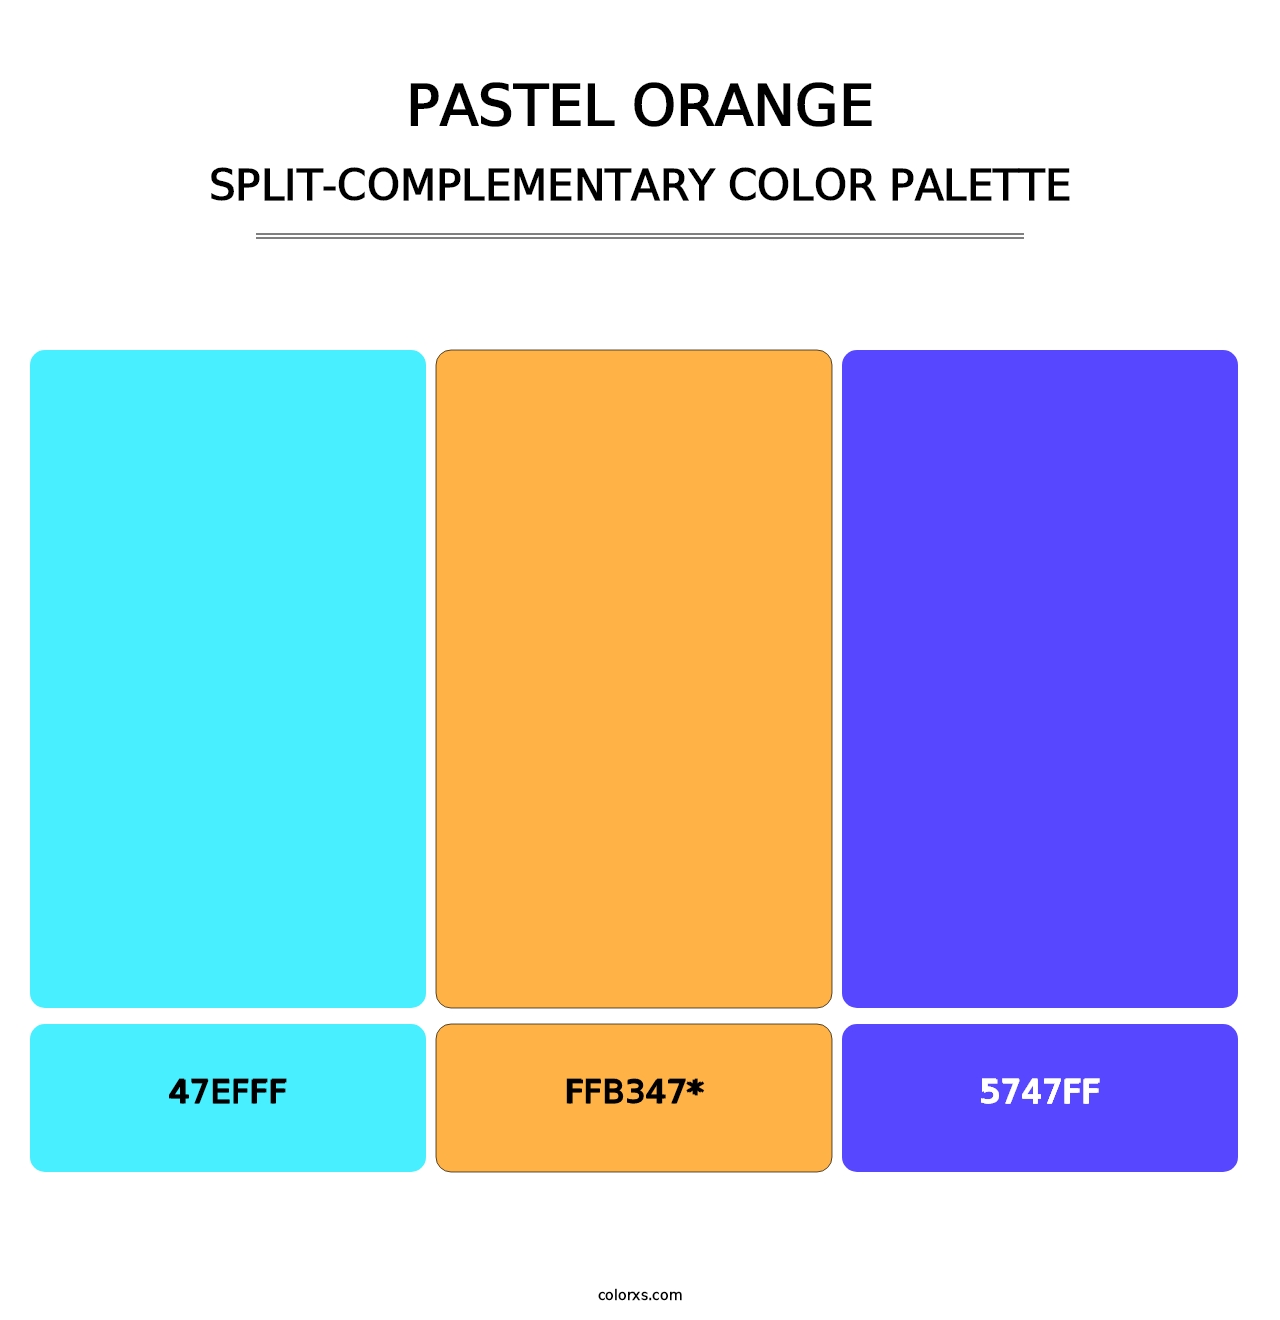 Pastel Orange - Split-Complementary Color Palette